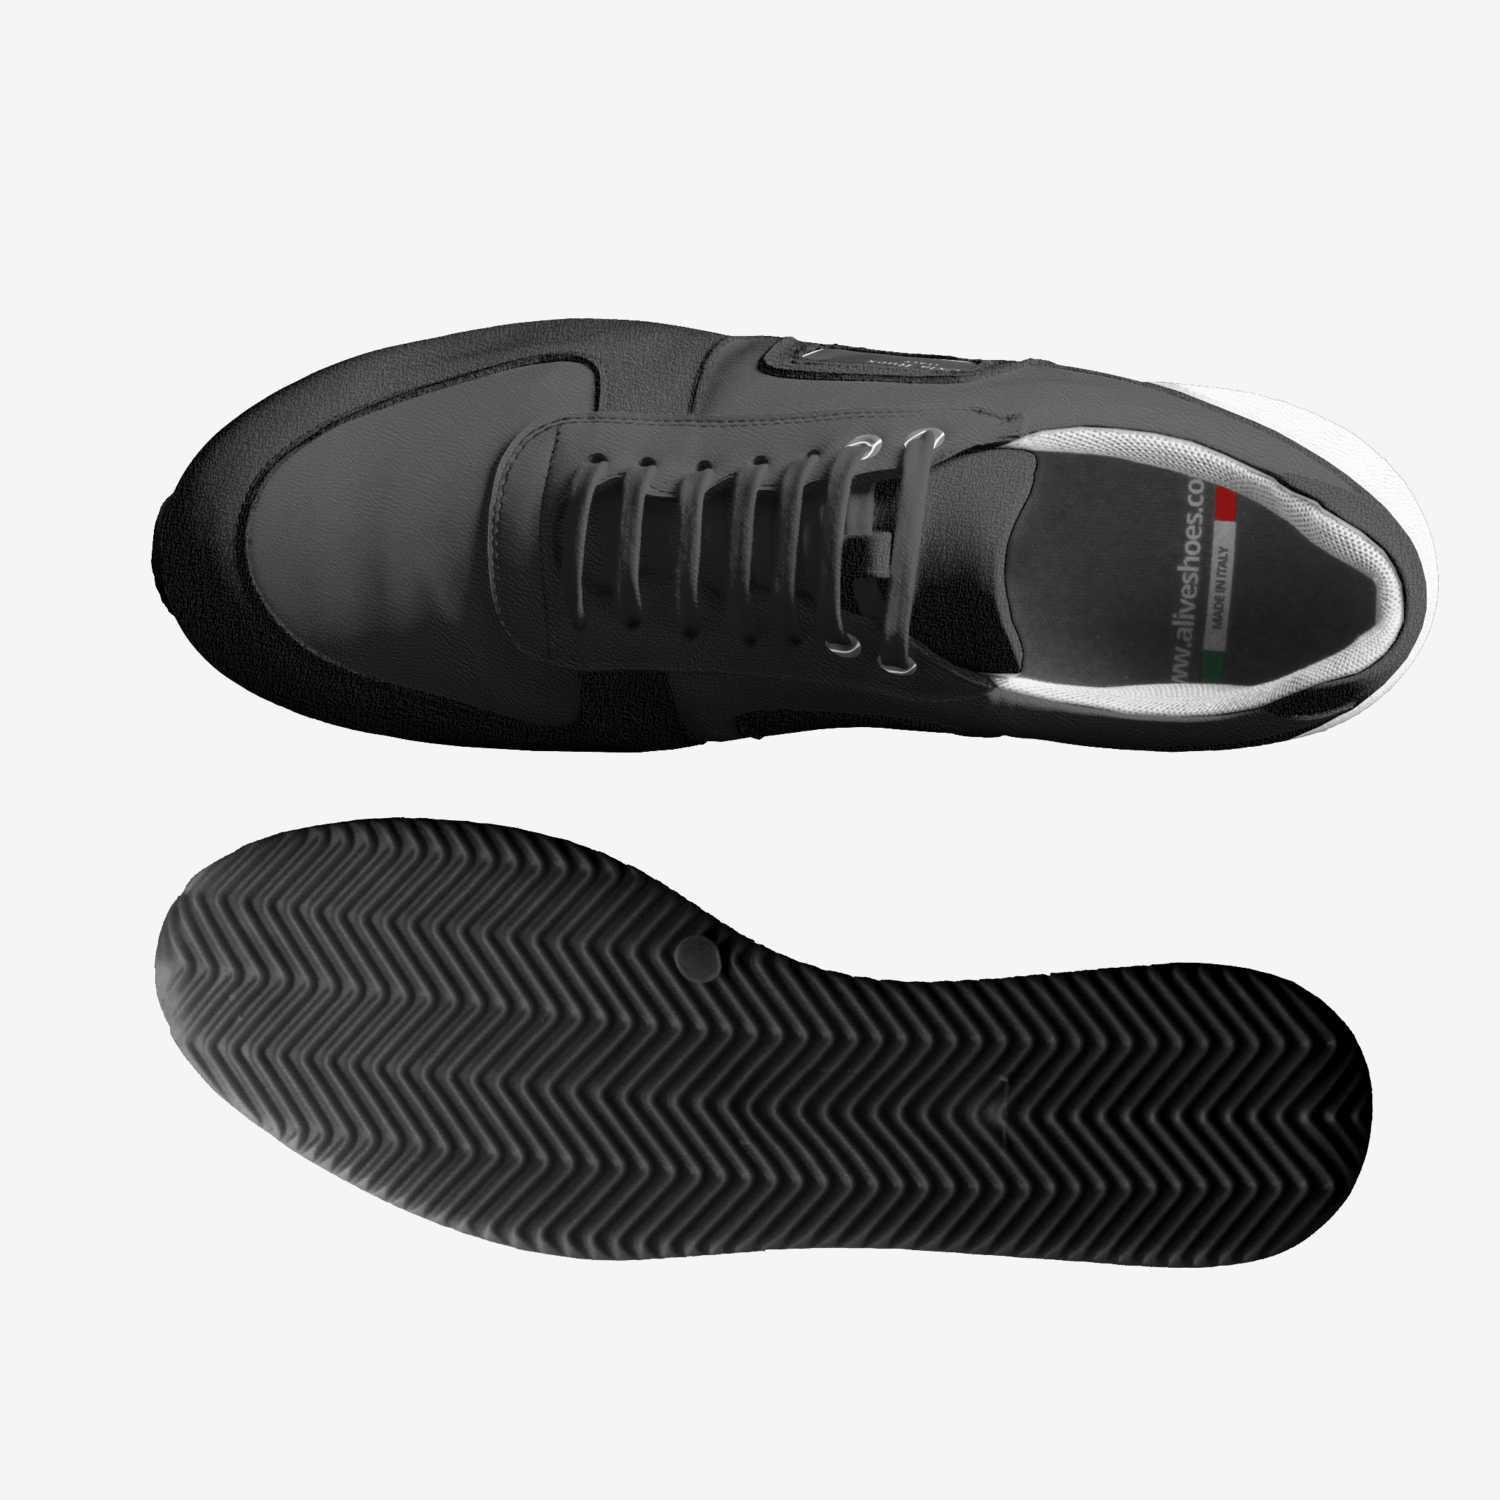 Cxla ruex pang run | A Custom Shoe concept by Wayne Wheeler